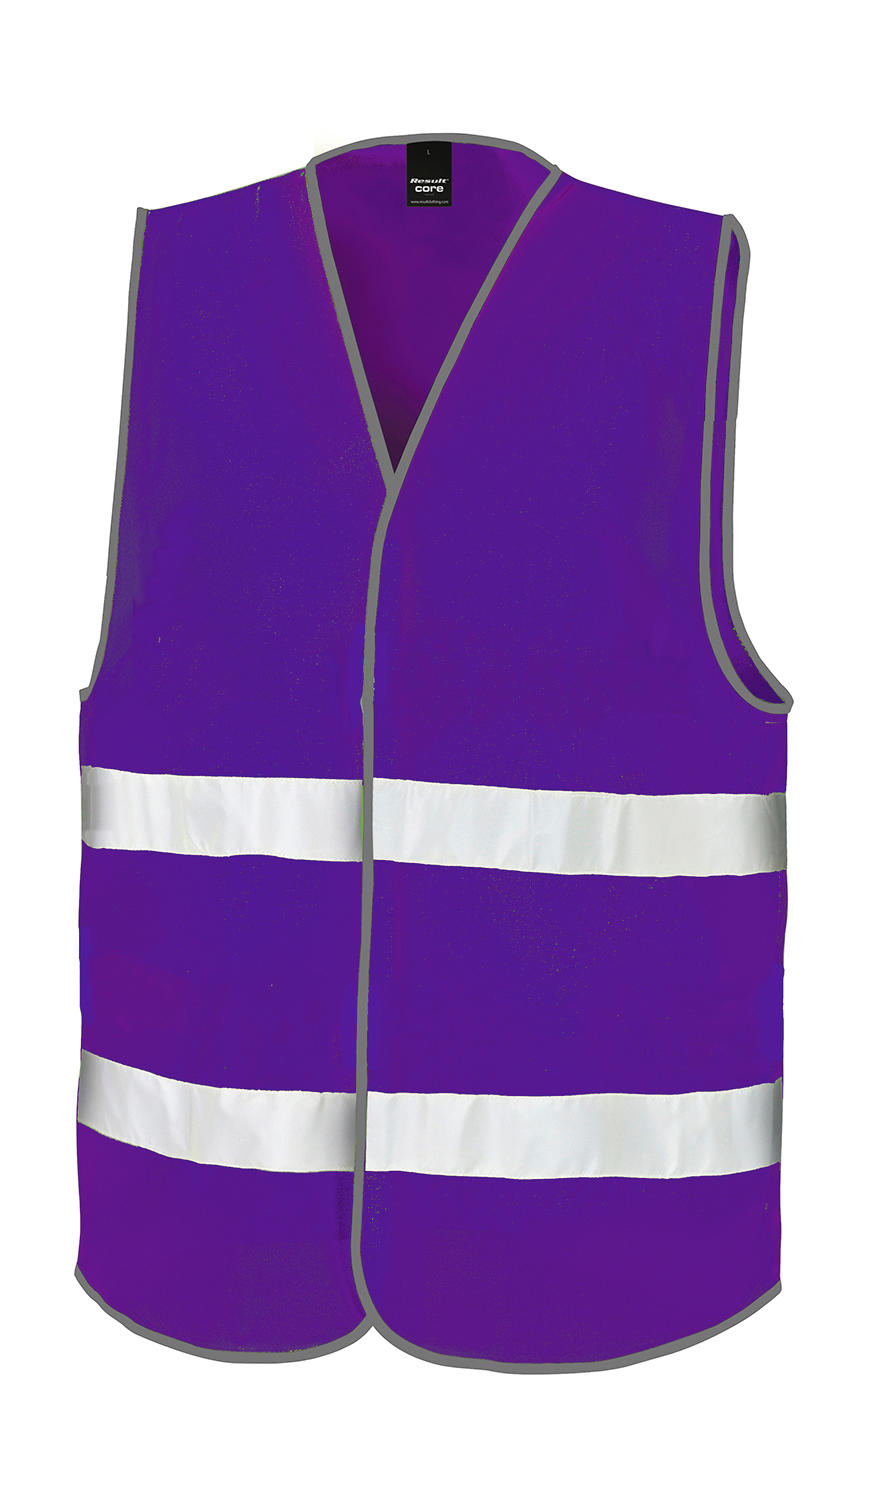  Core Enhanced Visibility Vest in Farbe Purple